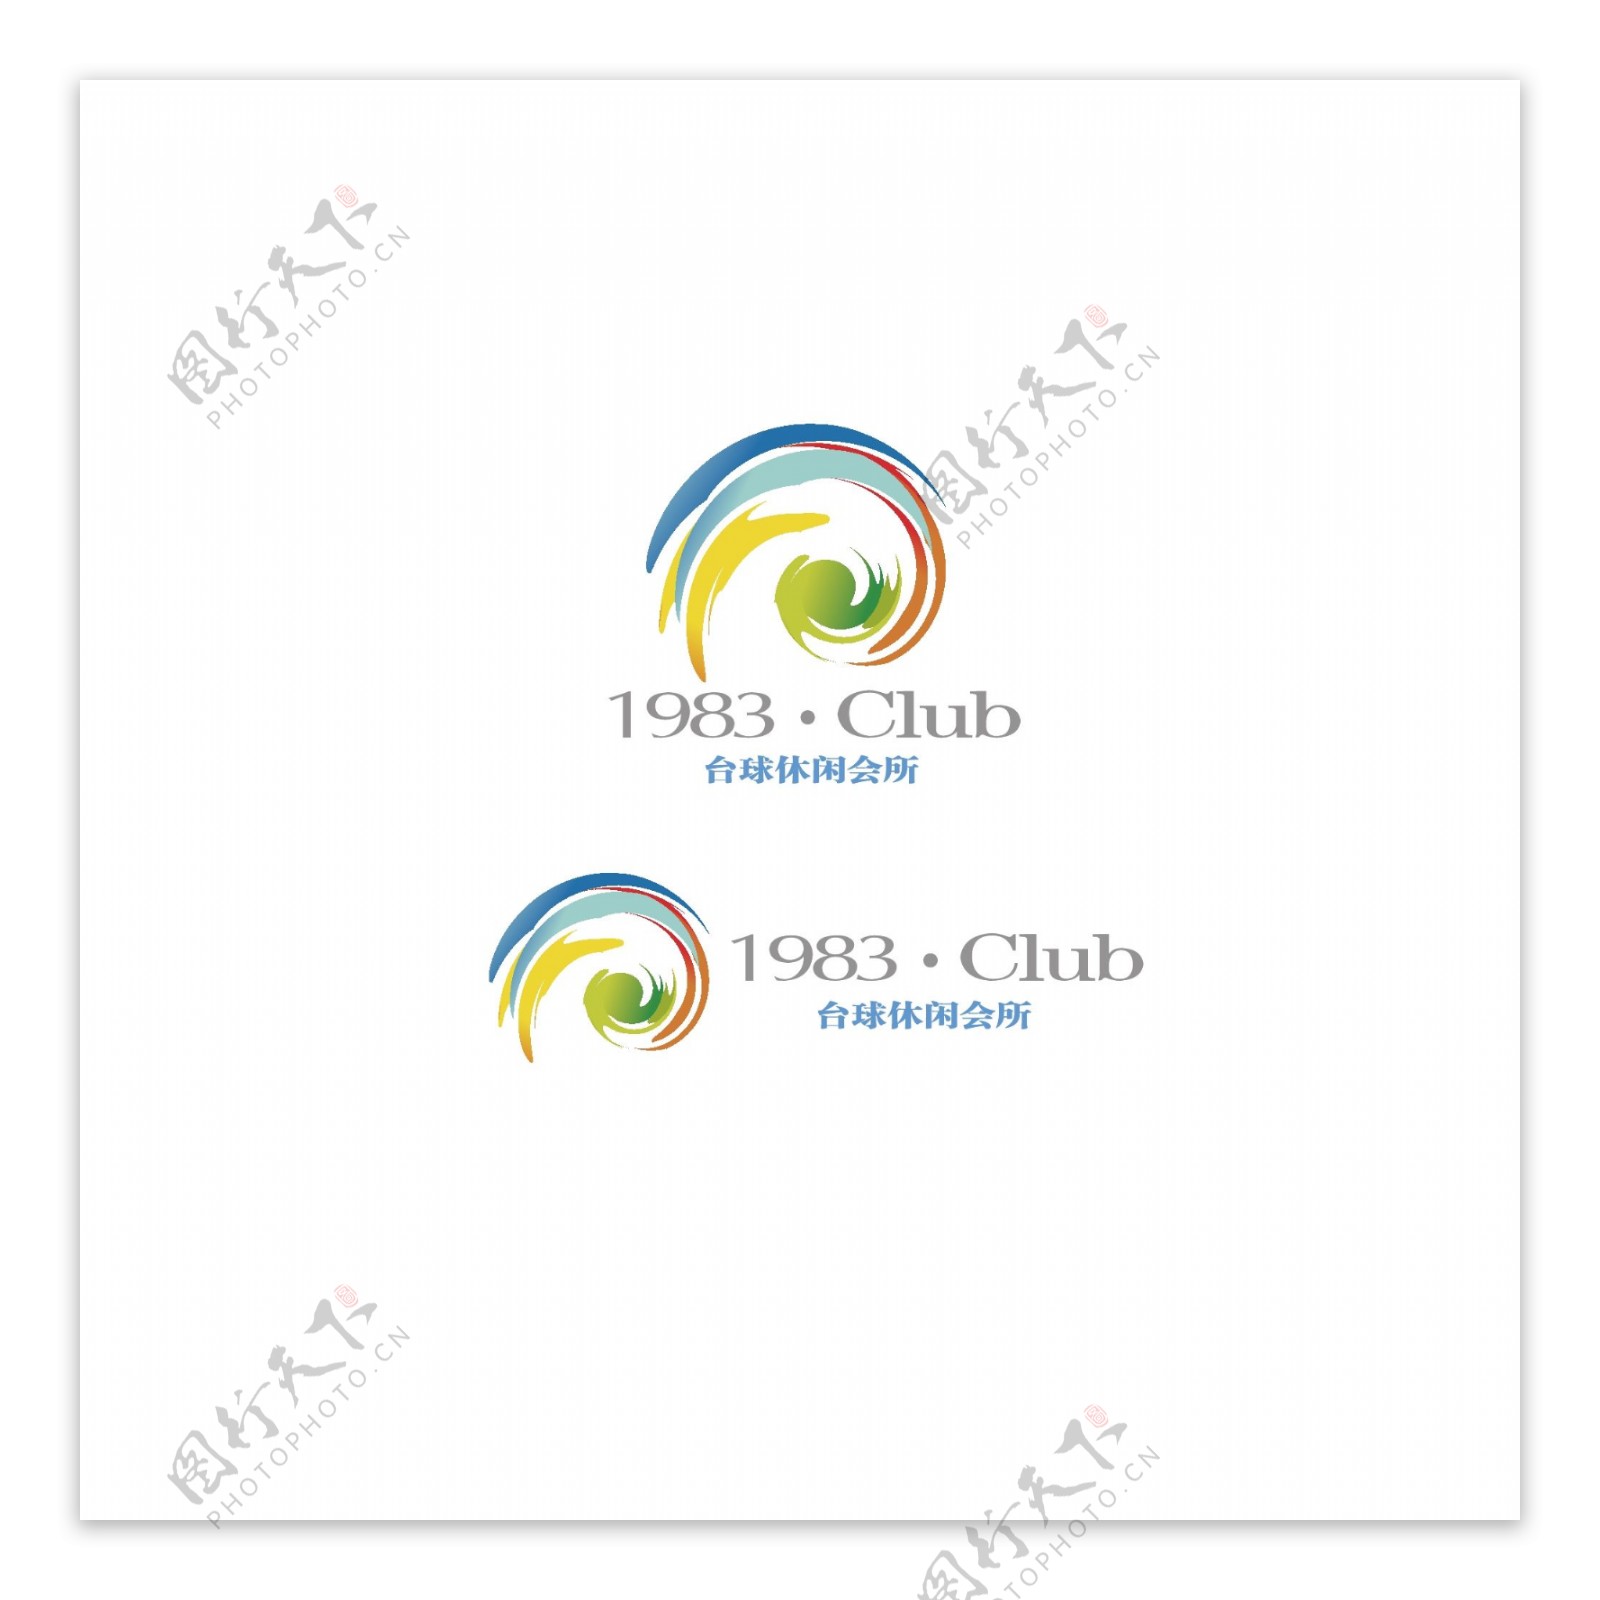 1983club台球会所logo图片